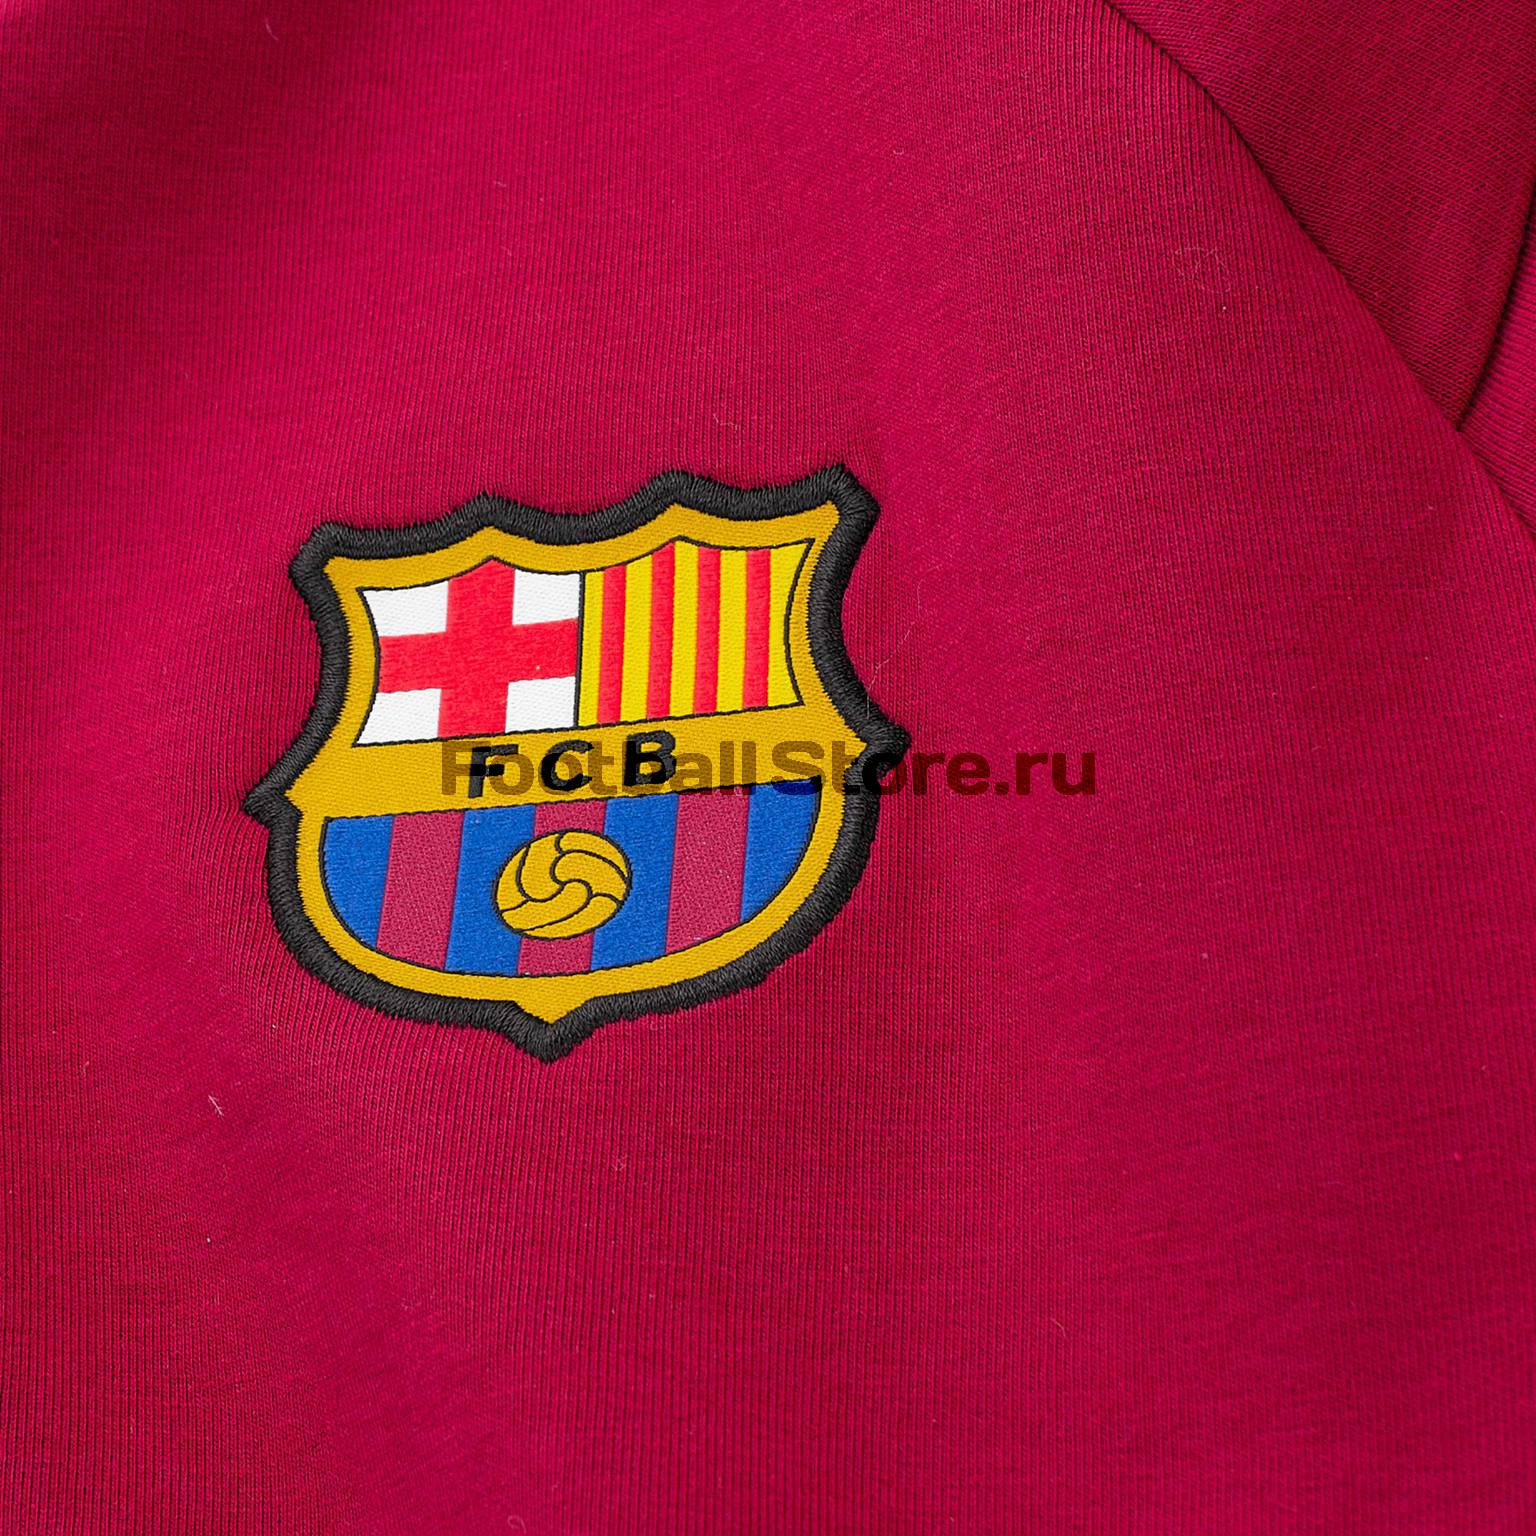 Свитер Nike Barcelona Fleece Crew CI2196-620